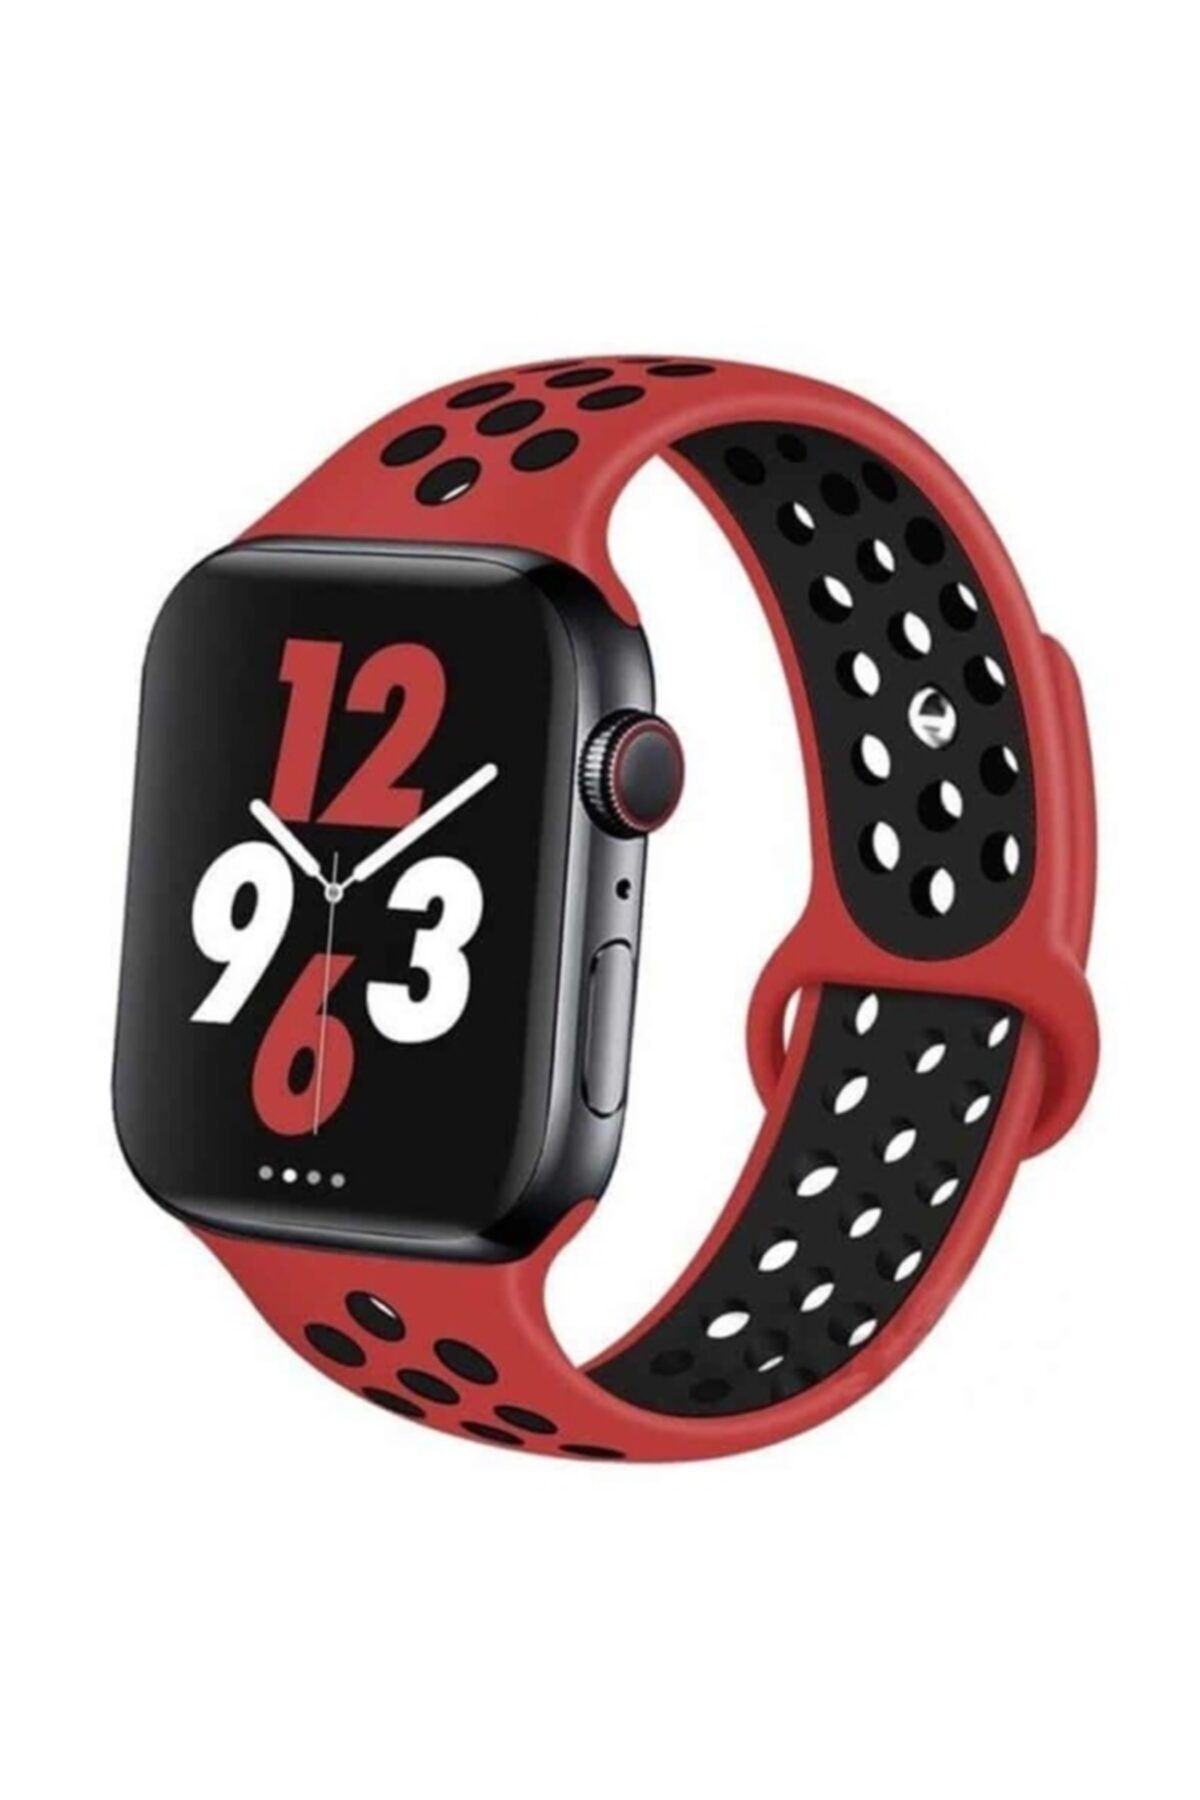 Teknoloji Gelsin Apple Watch 2 3 4 5 6 Se 42 44 Mm Uyumlu Kordon Delikli Spor Silikon Kordon Kayış - Kırmızı Siyah